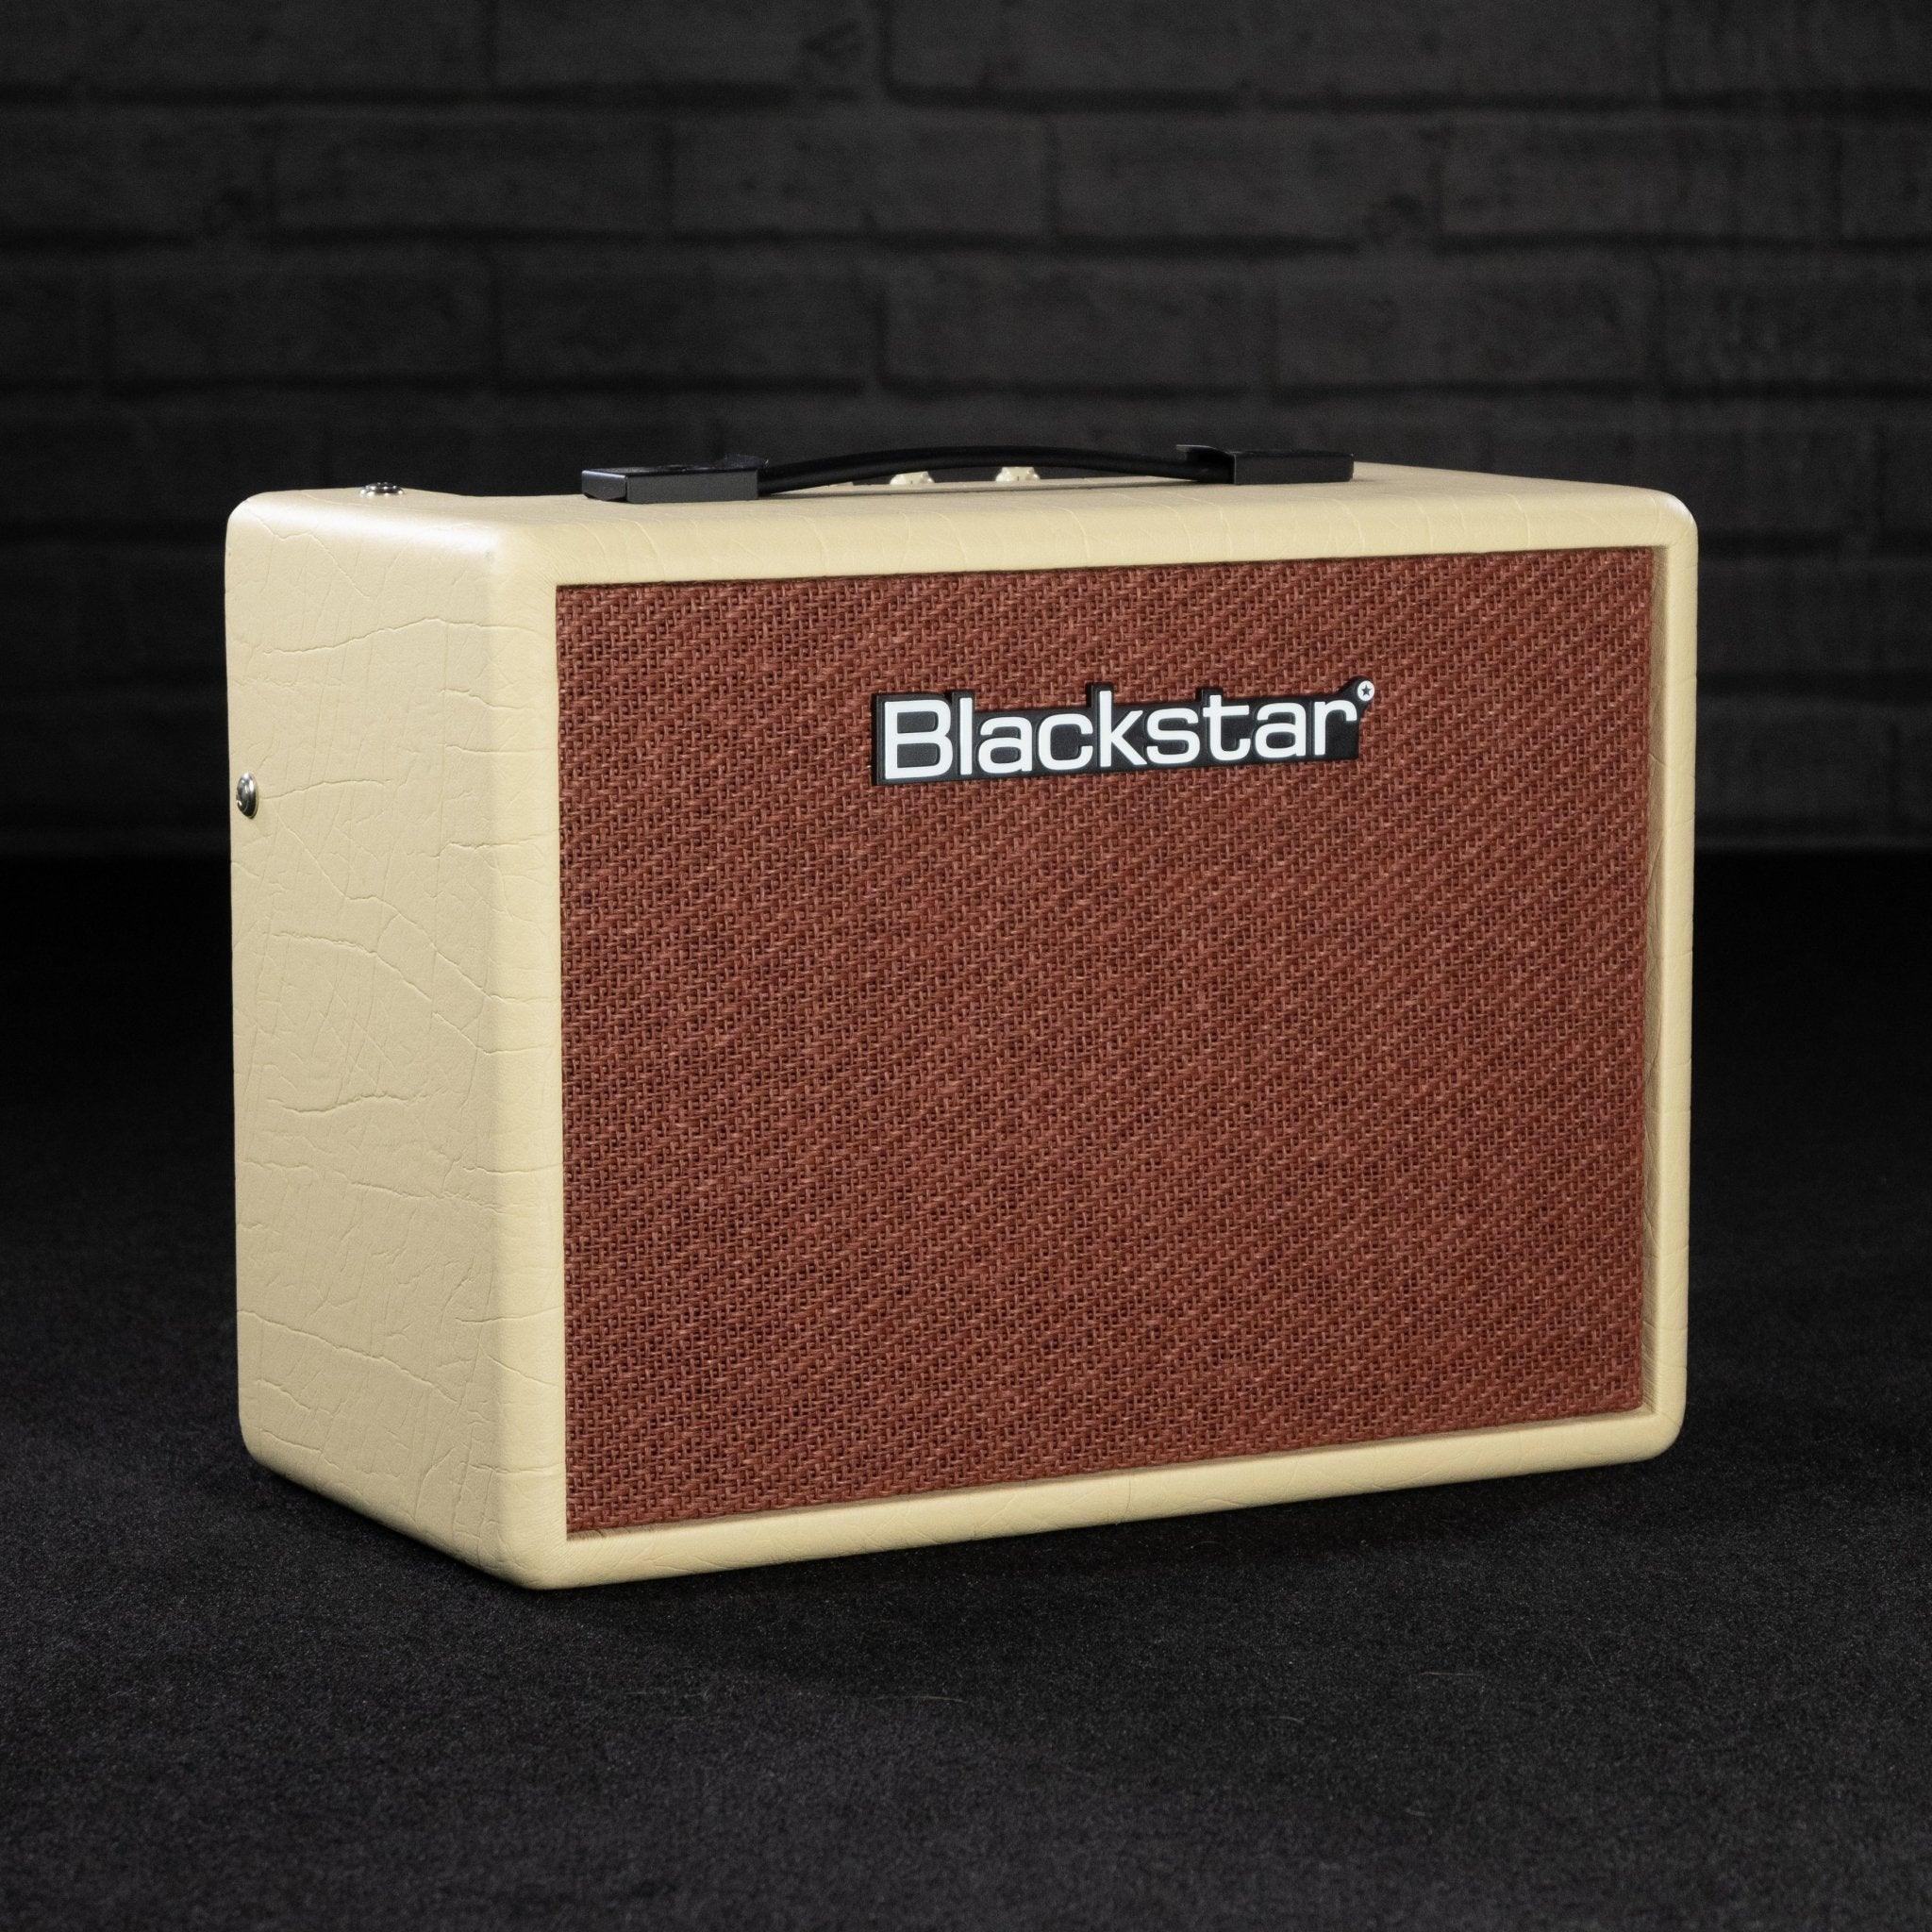 Blackstar Debut Series 15e Guitar Amplifier - Impulse Music Co.